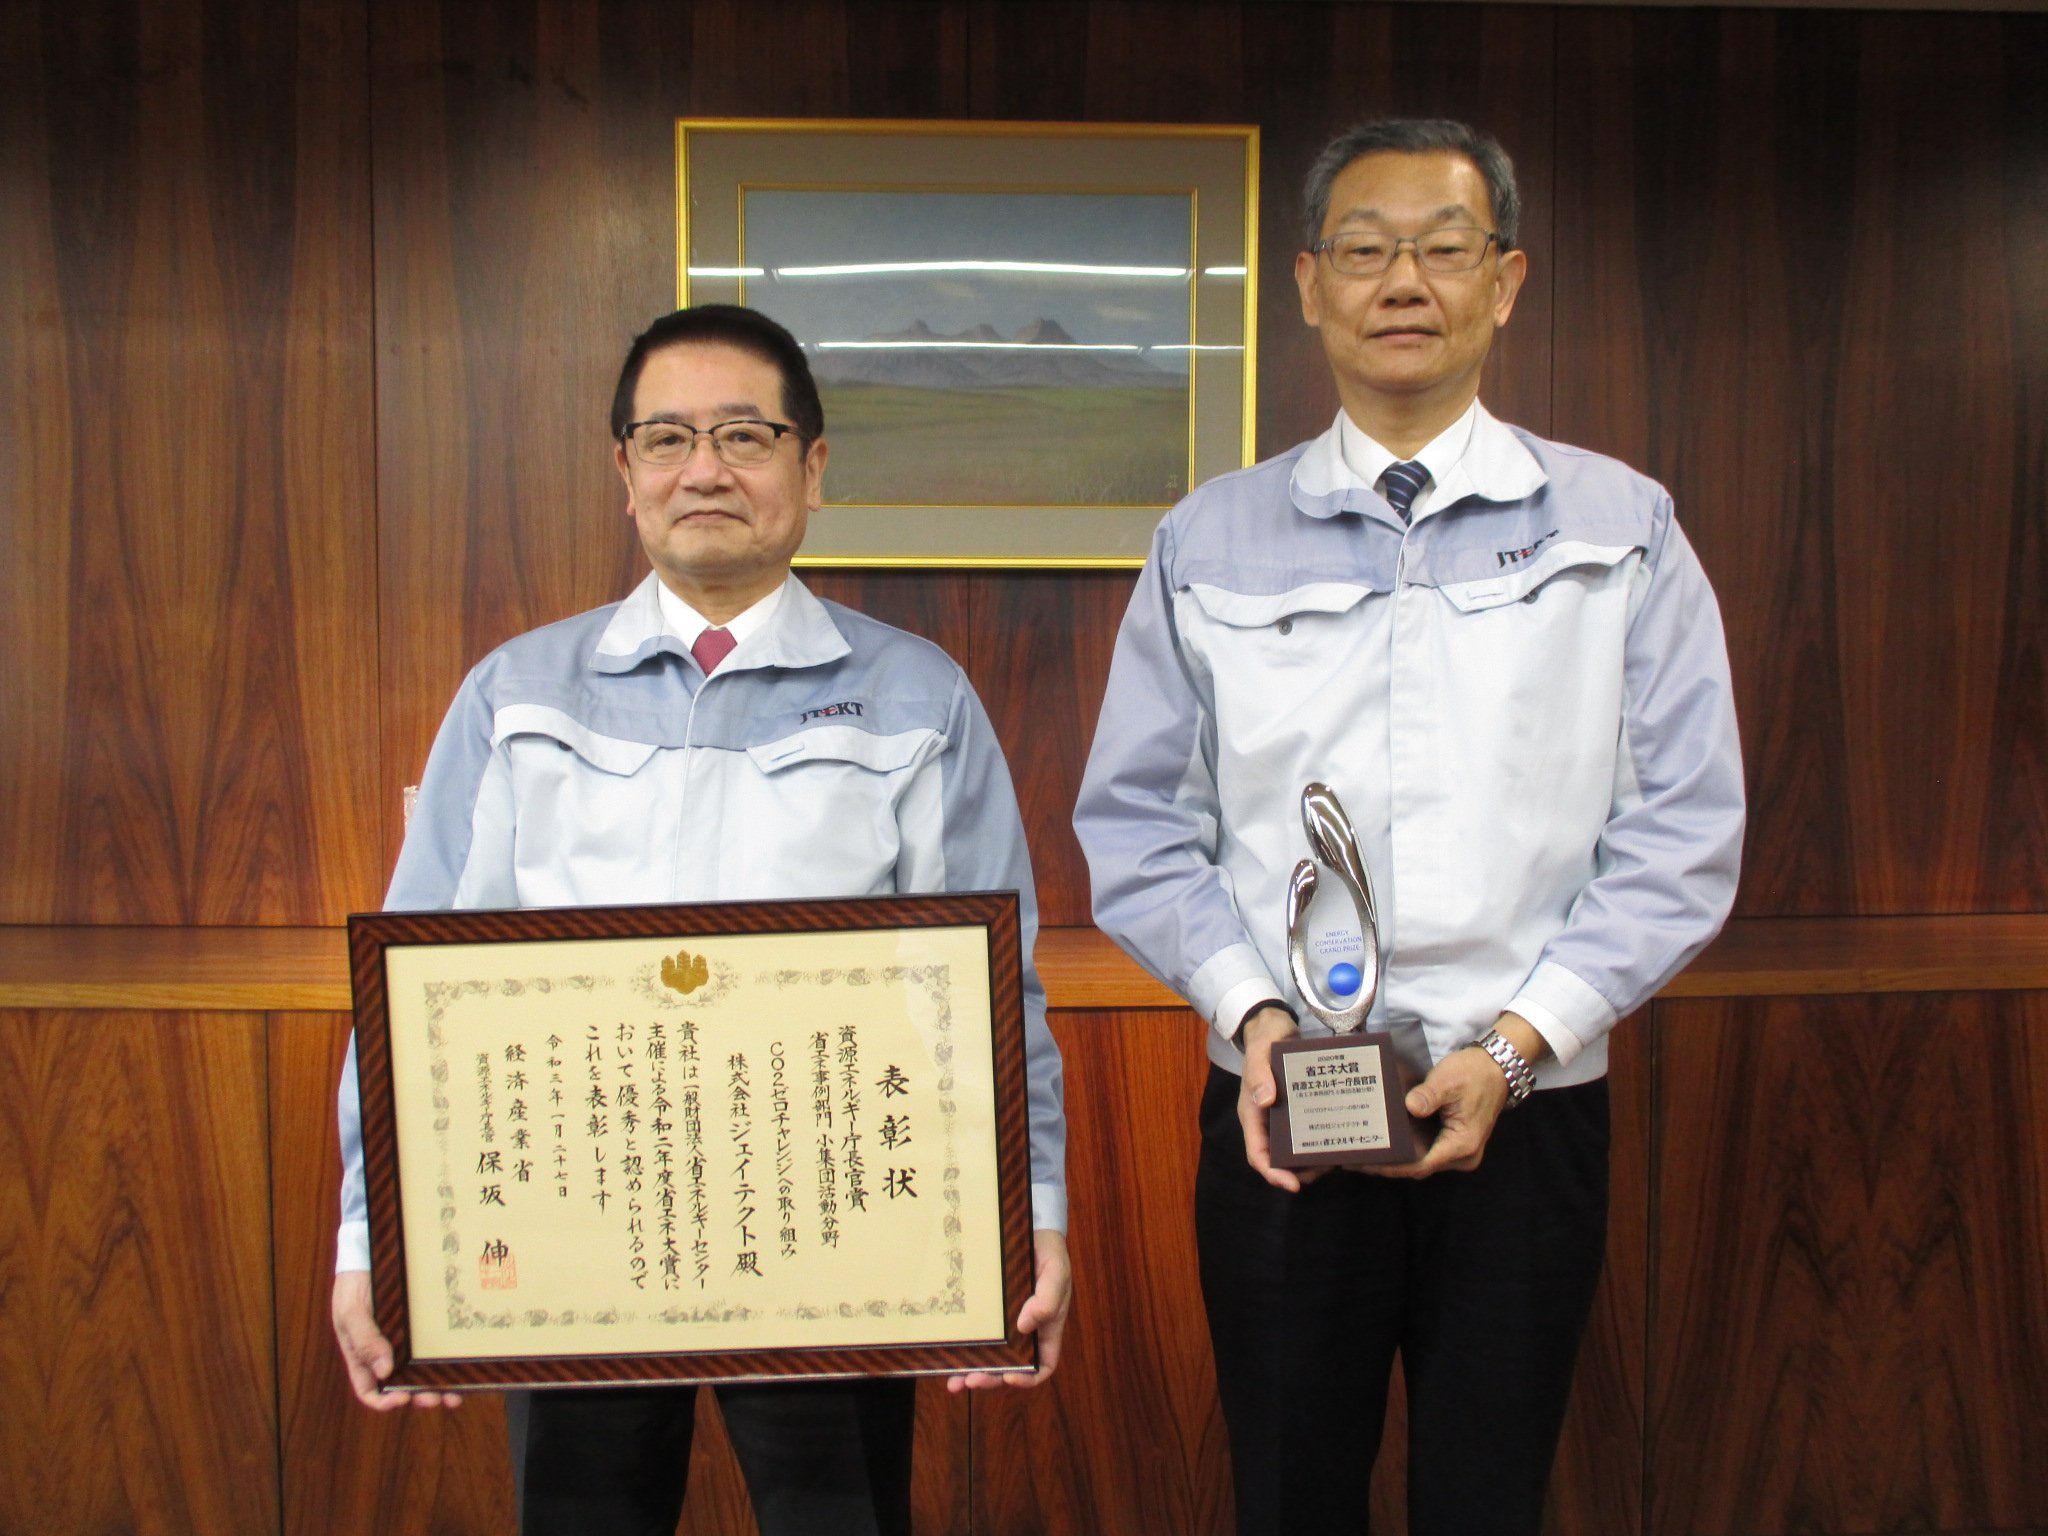 Left: Sato(President), Right: Sano(Senior Executive Officer)